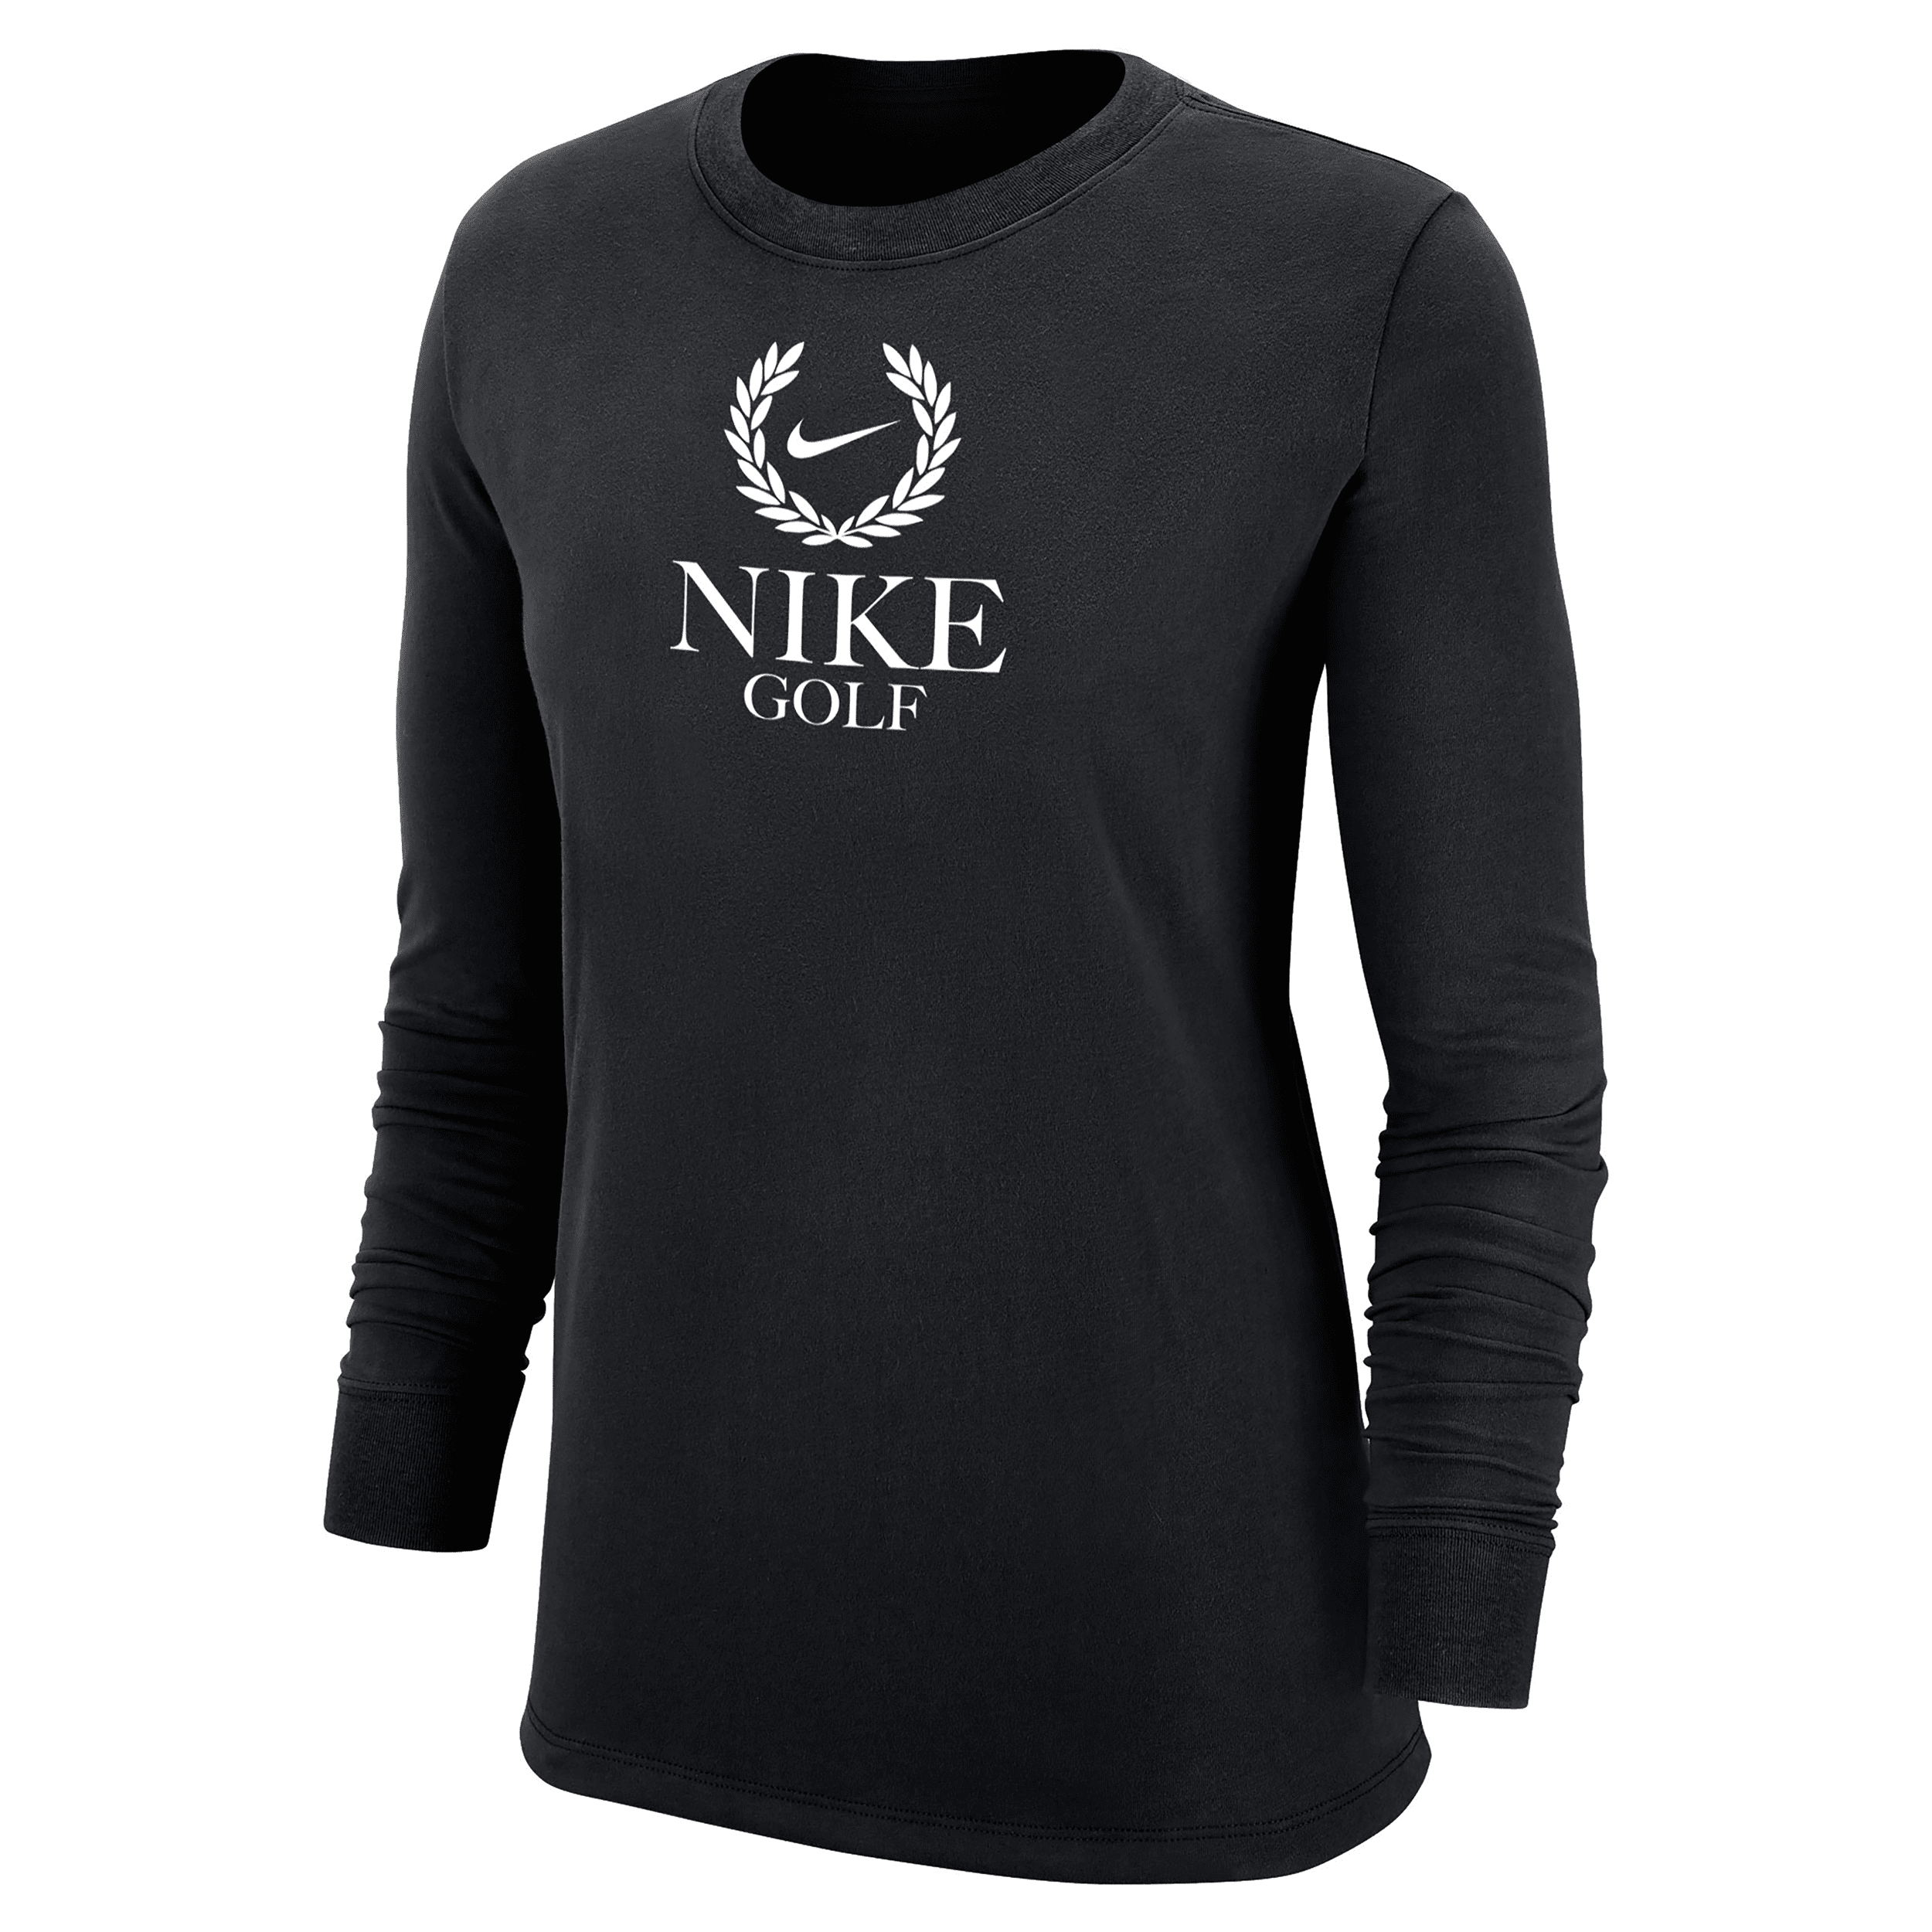 Nike Women's Golf Long-sleeve T-shirt In Black